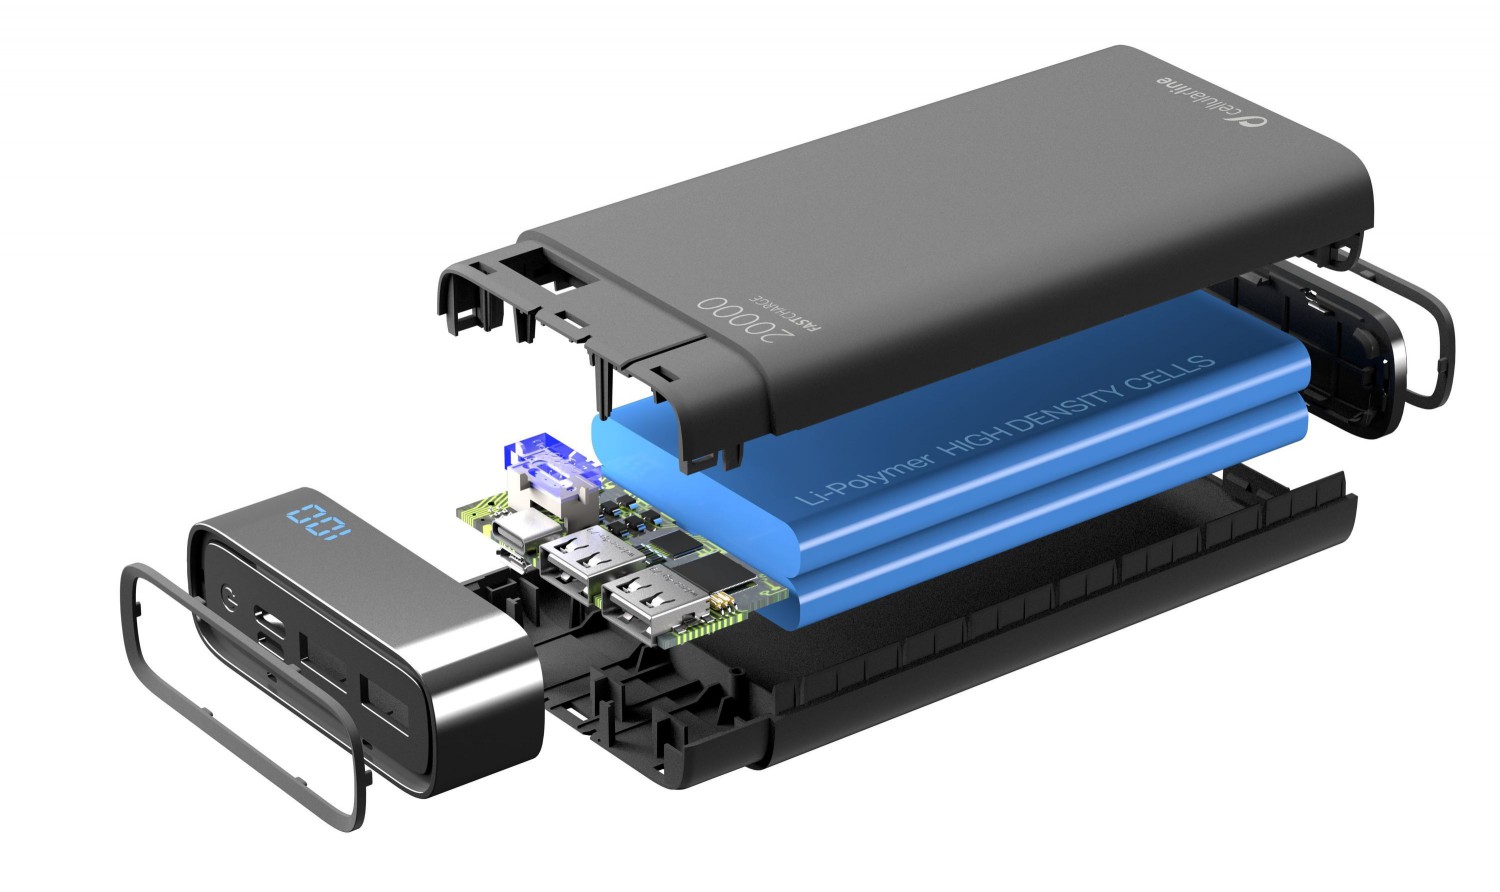 Kompaktní powerbanka Cellularline FreePower Manta HD 20000mAh, Smartphone Detect, USB-C + 2xUSB port, černá